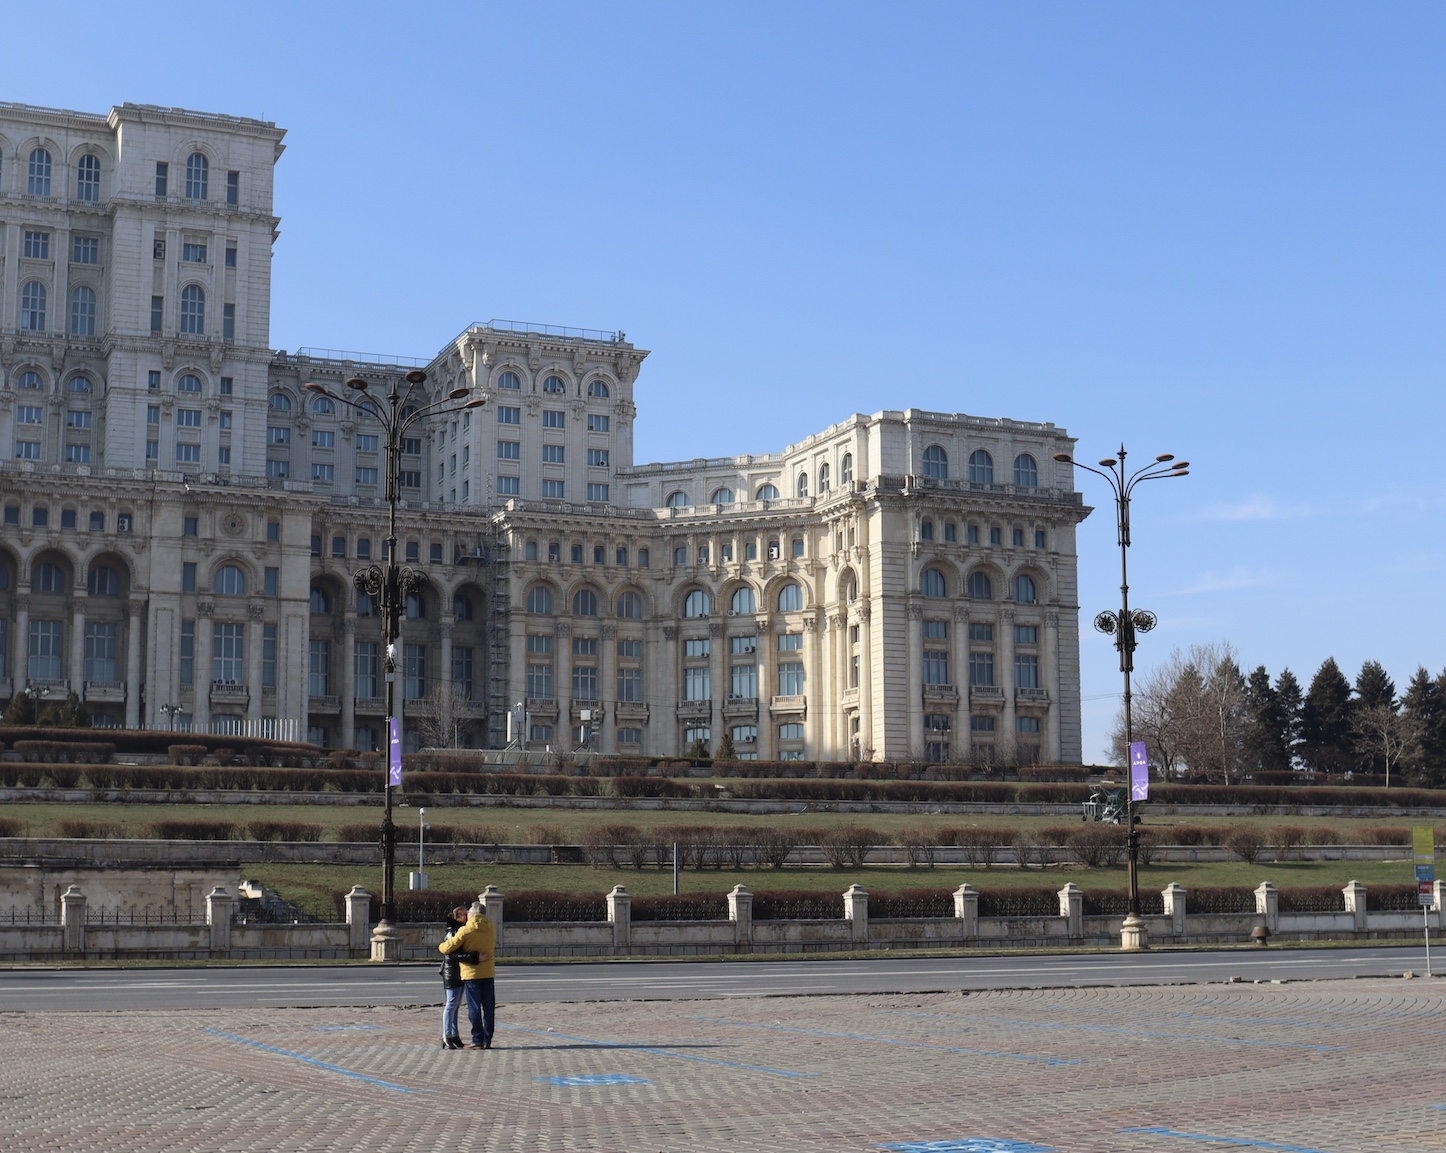 A couple hugs in the plaza in front of Palatul Parlamentului